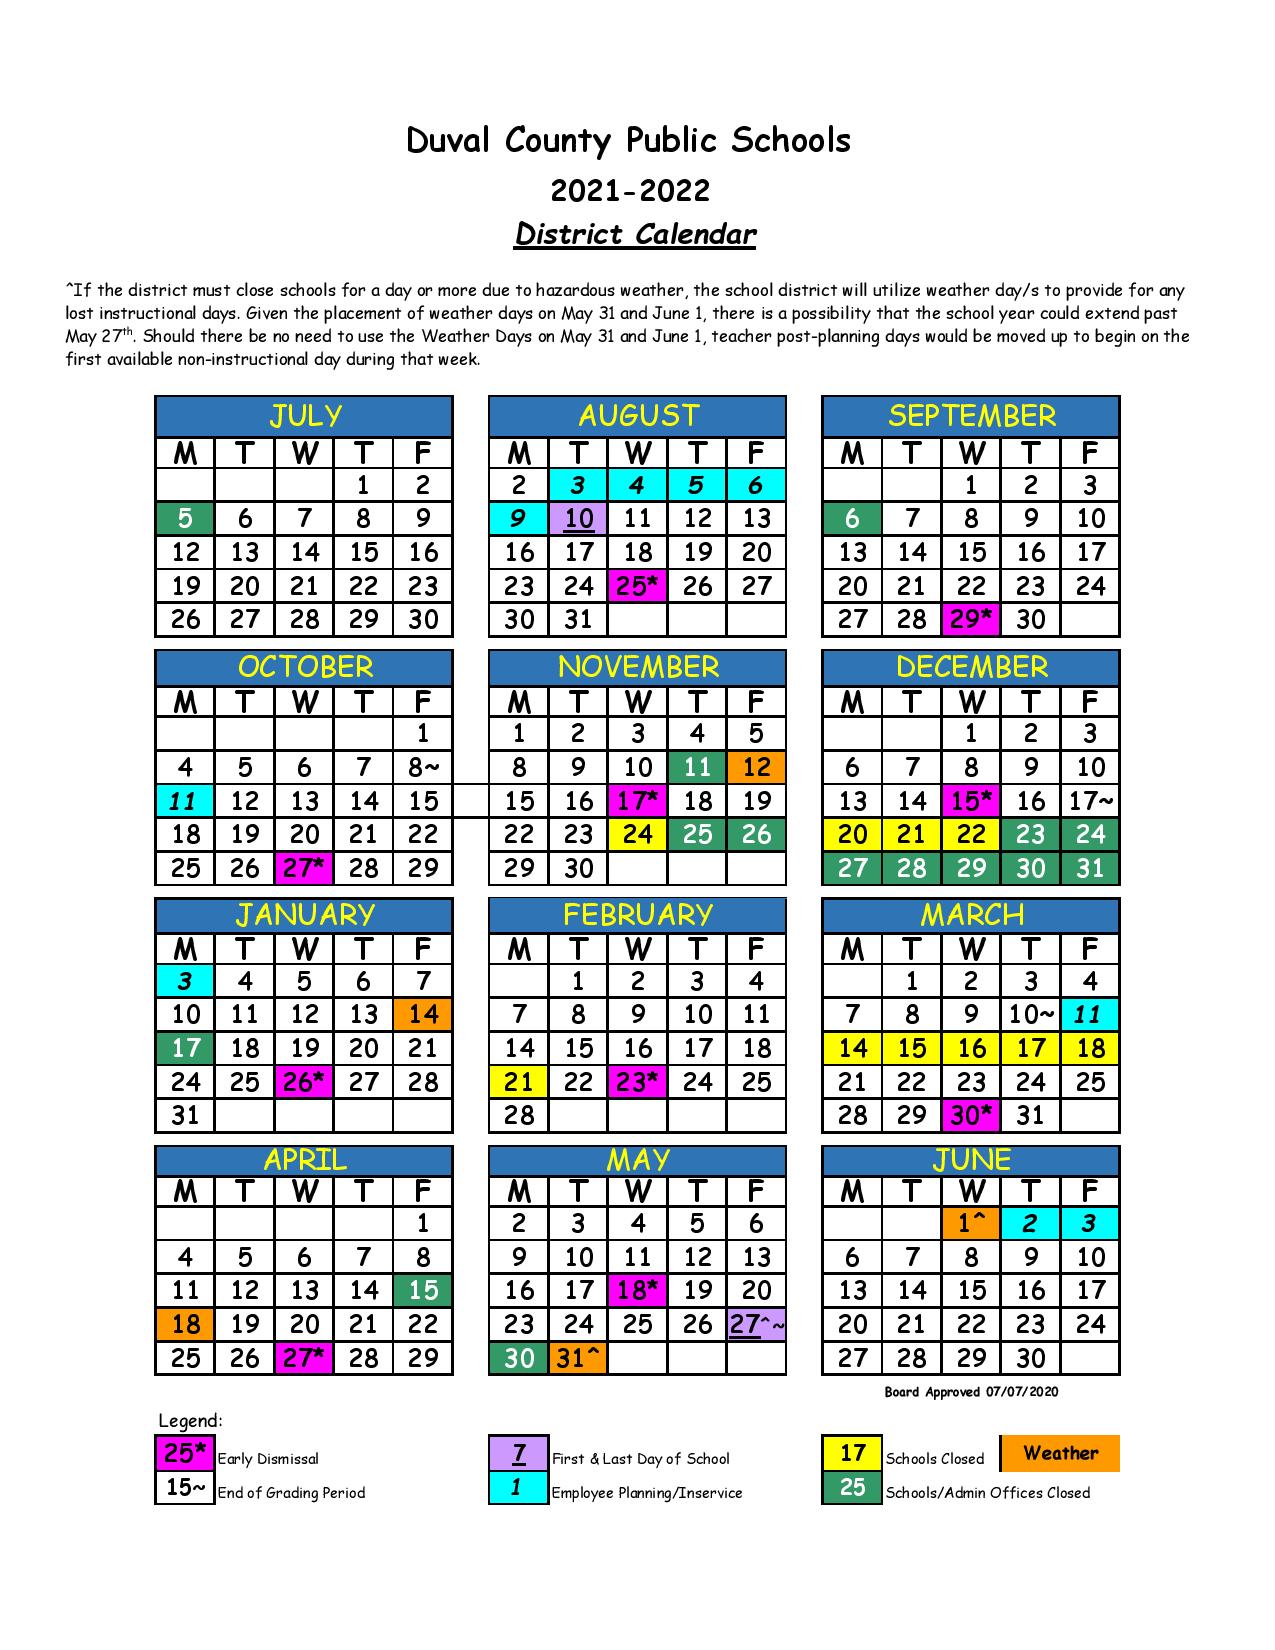 duval-county-public-schools-calendar-2021-2022-in-pdf